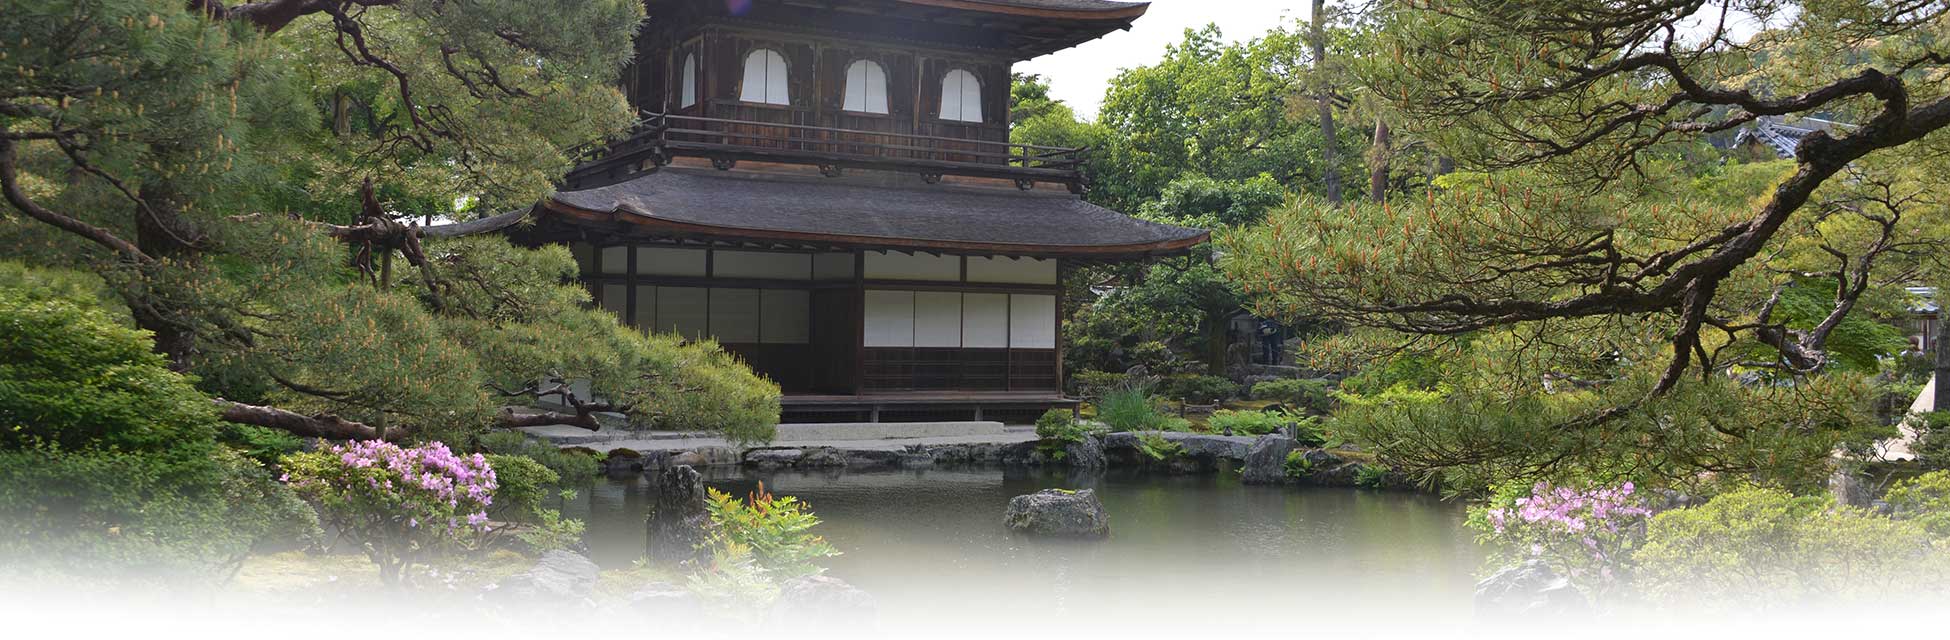 japan-kyoto-zilveren-tuin-tempel.jpg